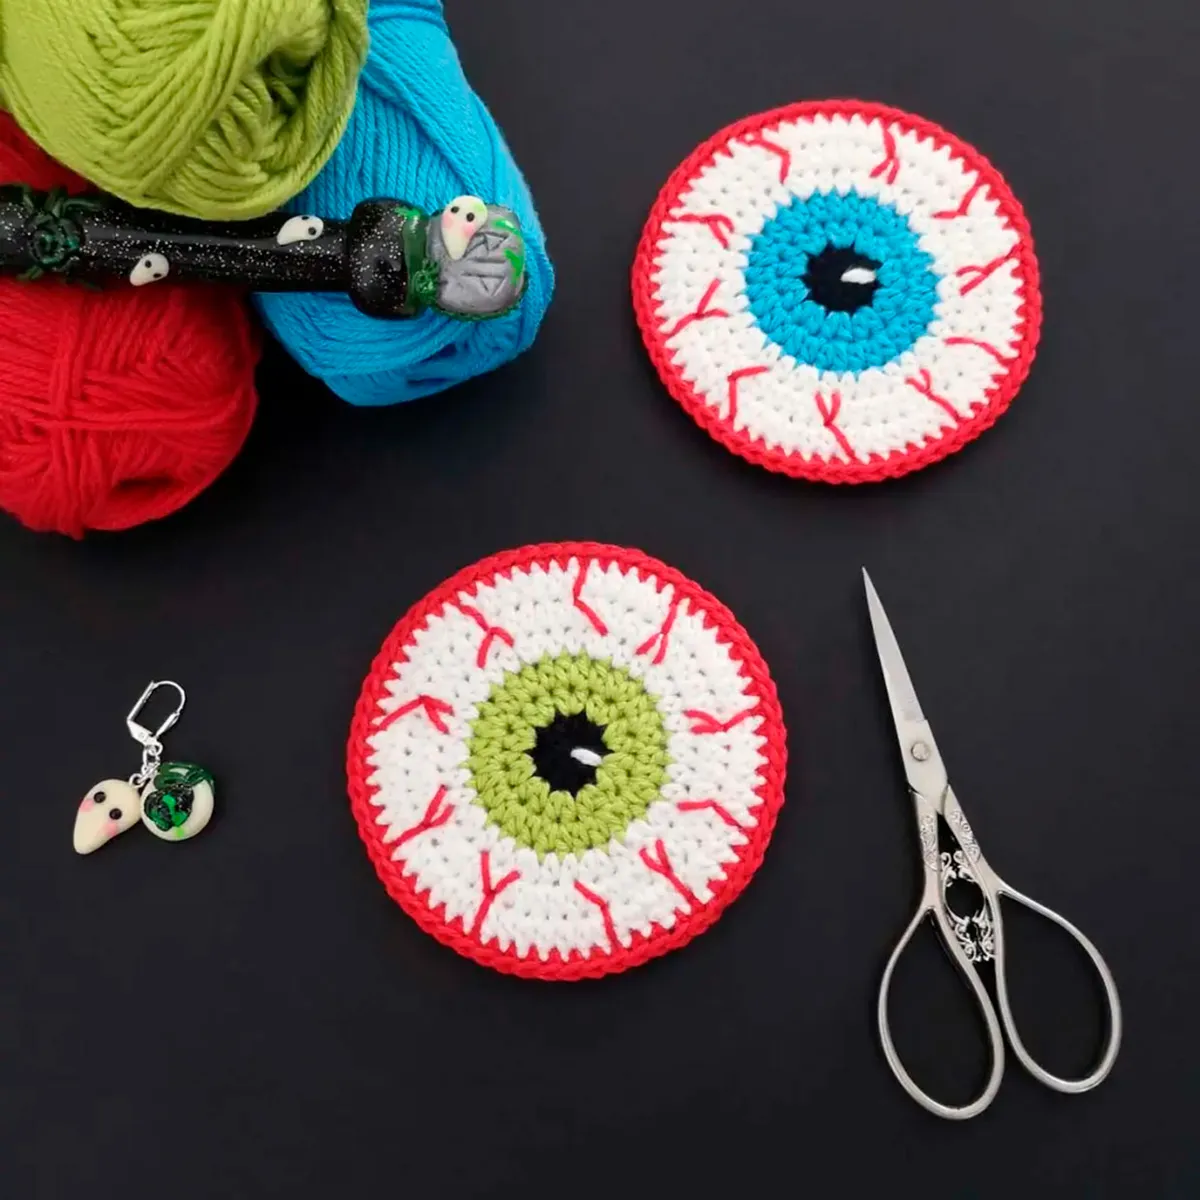 Crochet eyeball coasters